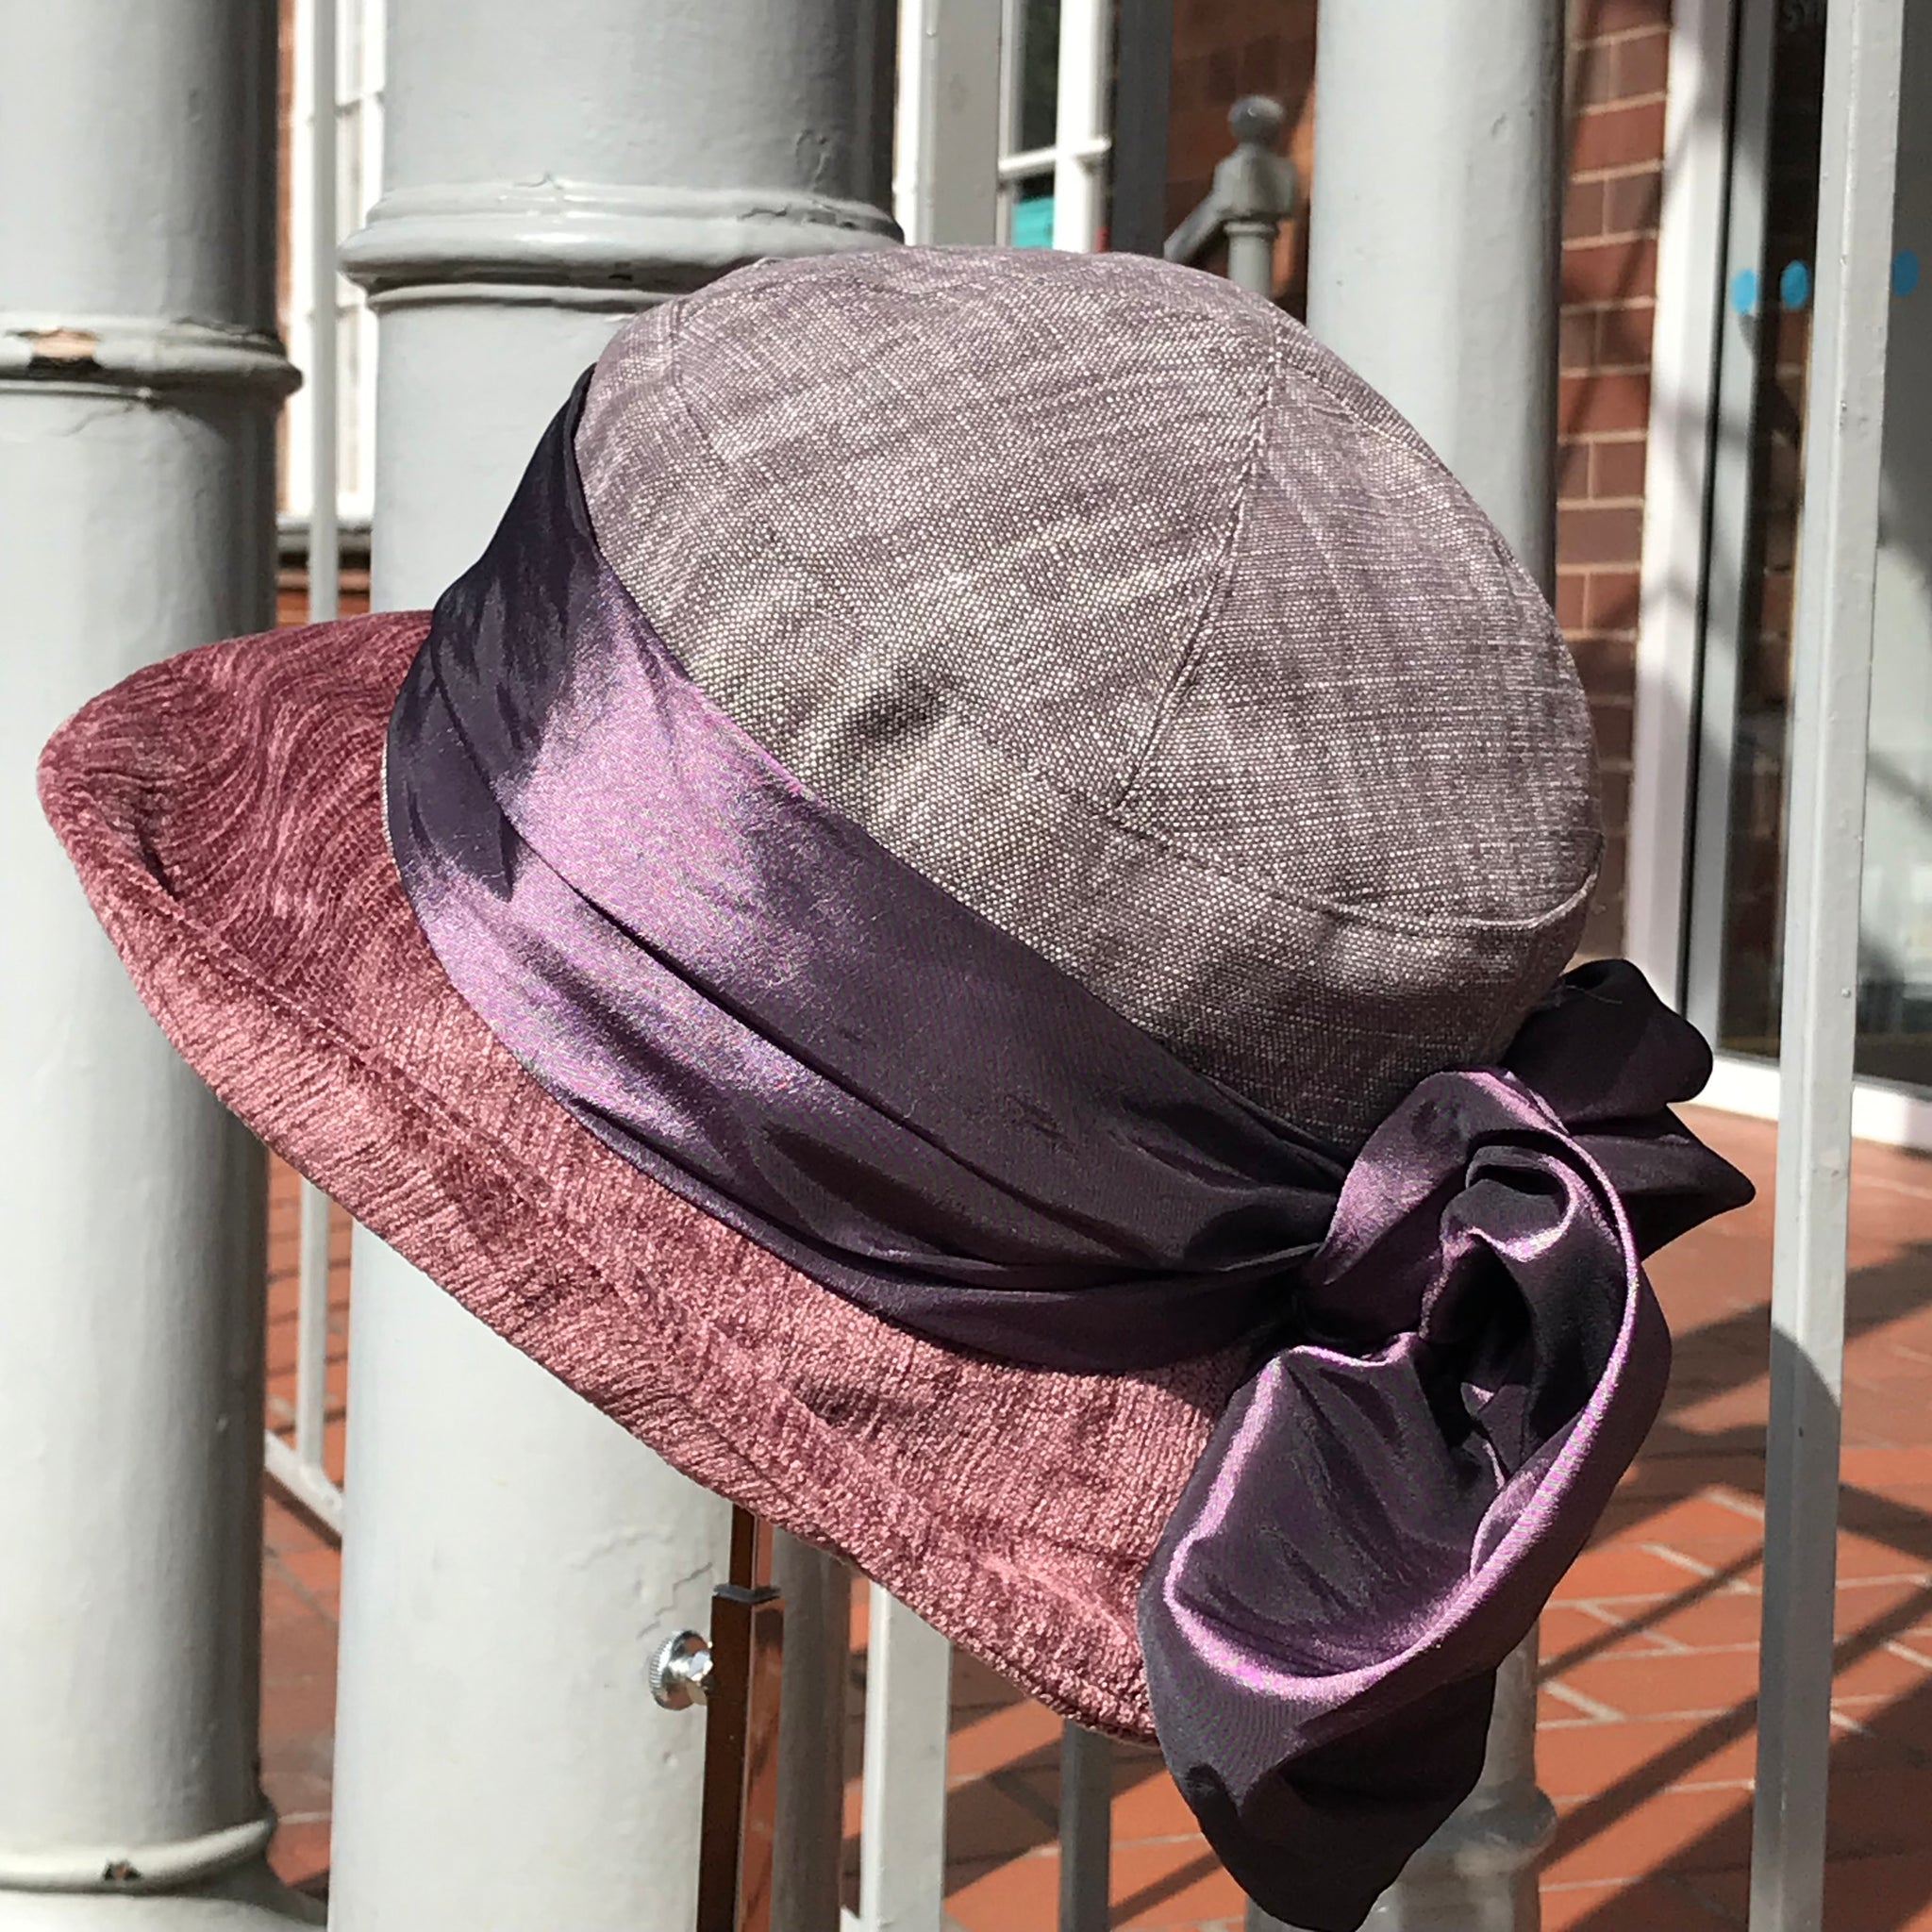 Vintage Tapestry Cloche hat - Mauve silk